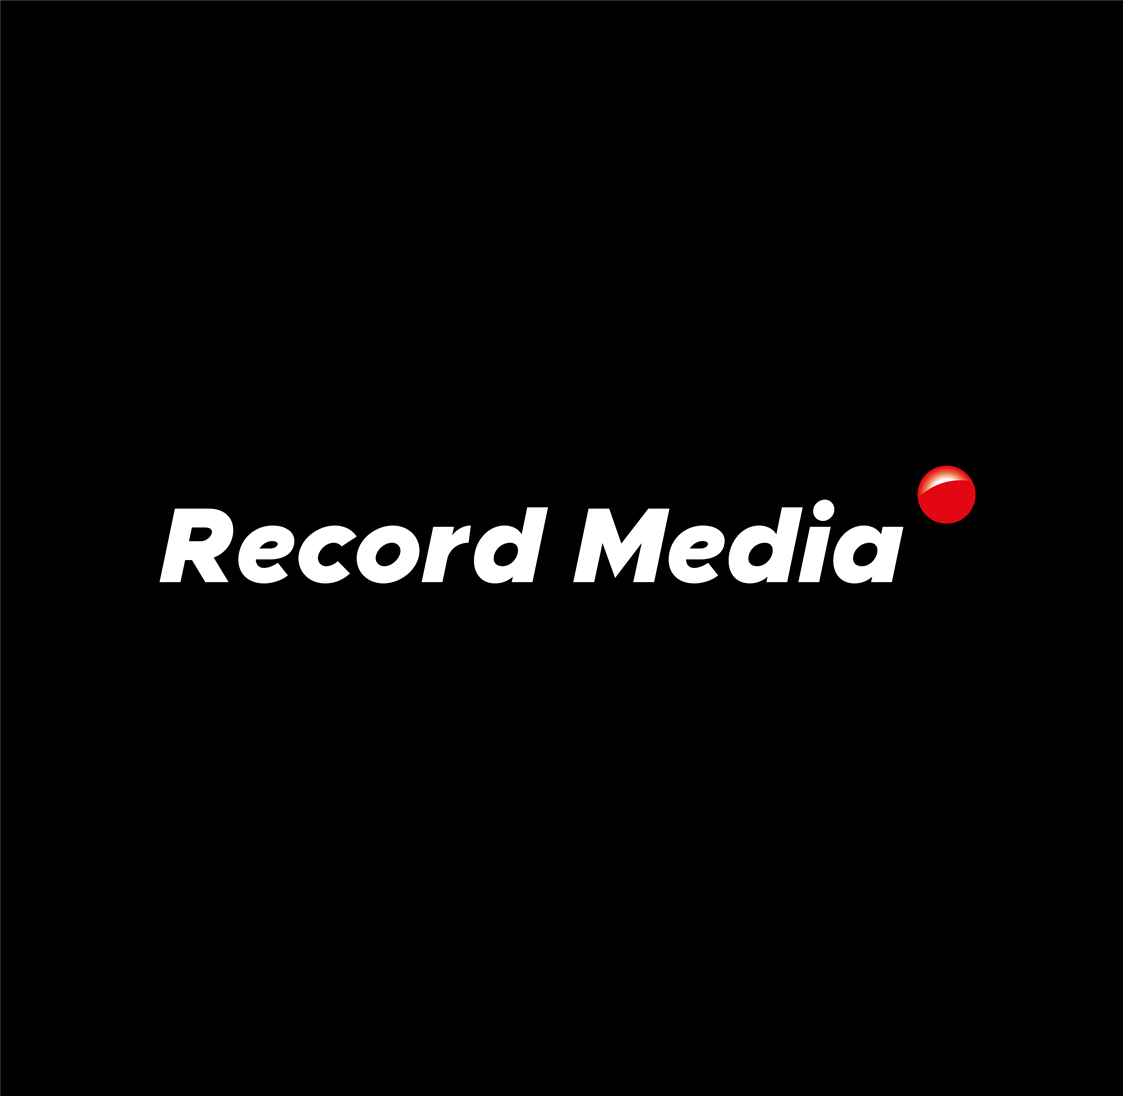 Hochzeitsfotograf: Record Media Logo - Record Media KG - Hochzeitsvideo/Hochzeitsvideograf/Hochzeitsfilm